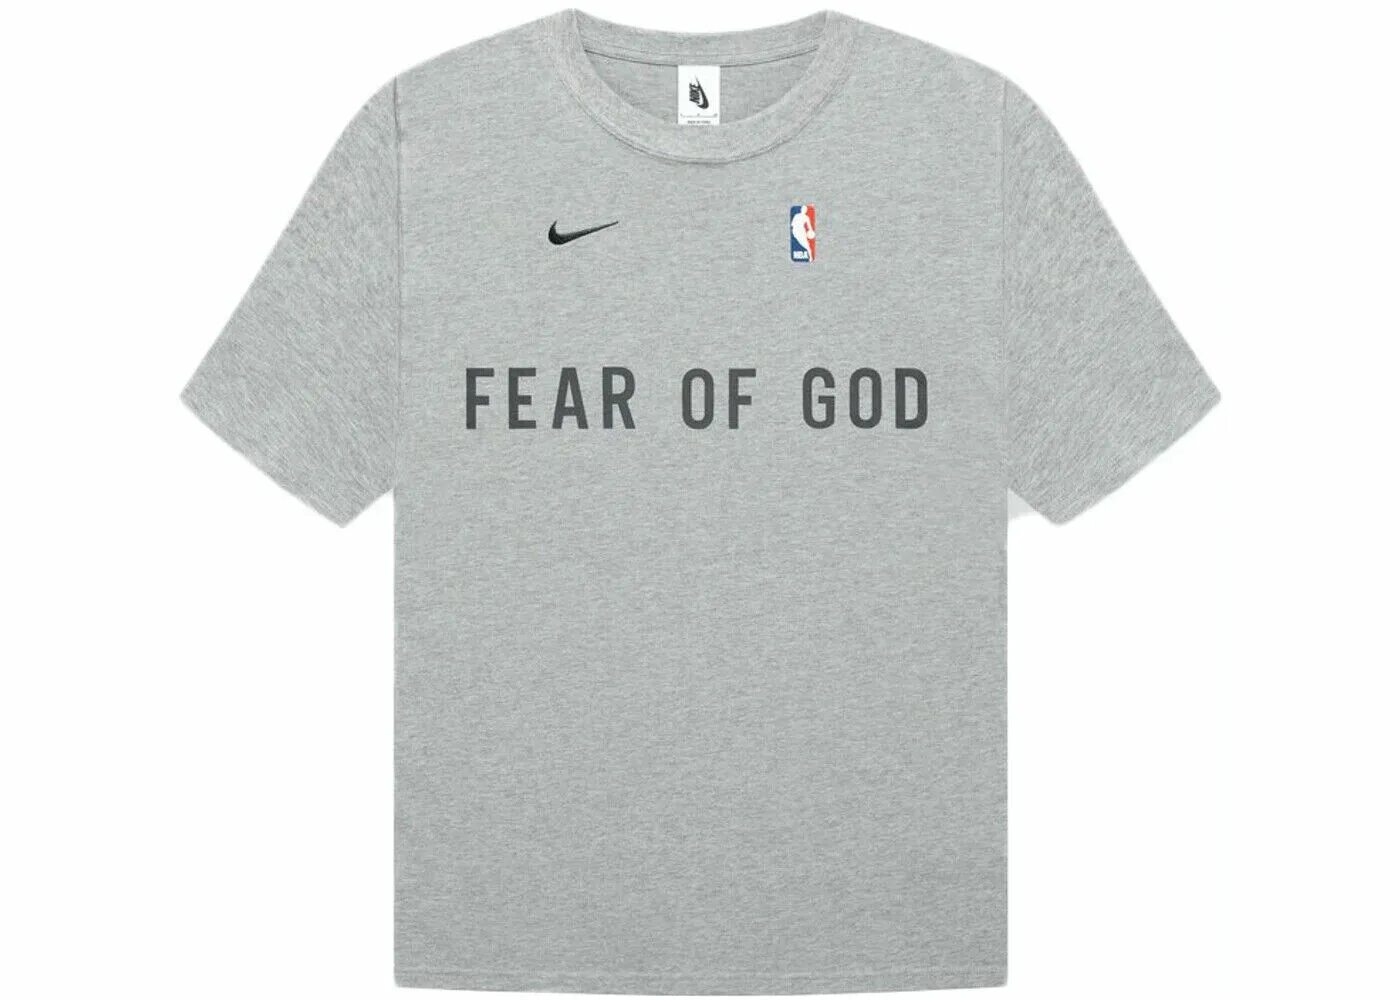 Футболка Nike Fear of God NBA. Nike Fear of God футболка. Nike x Fear of God футболка. Майка adidas x Fear of God.